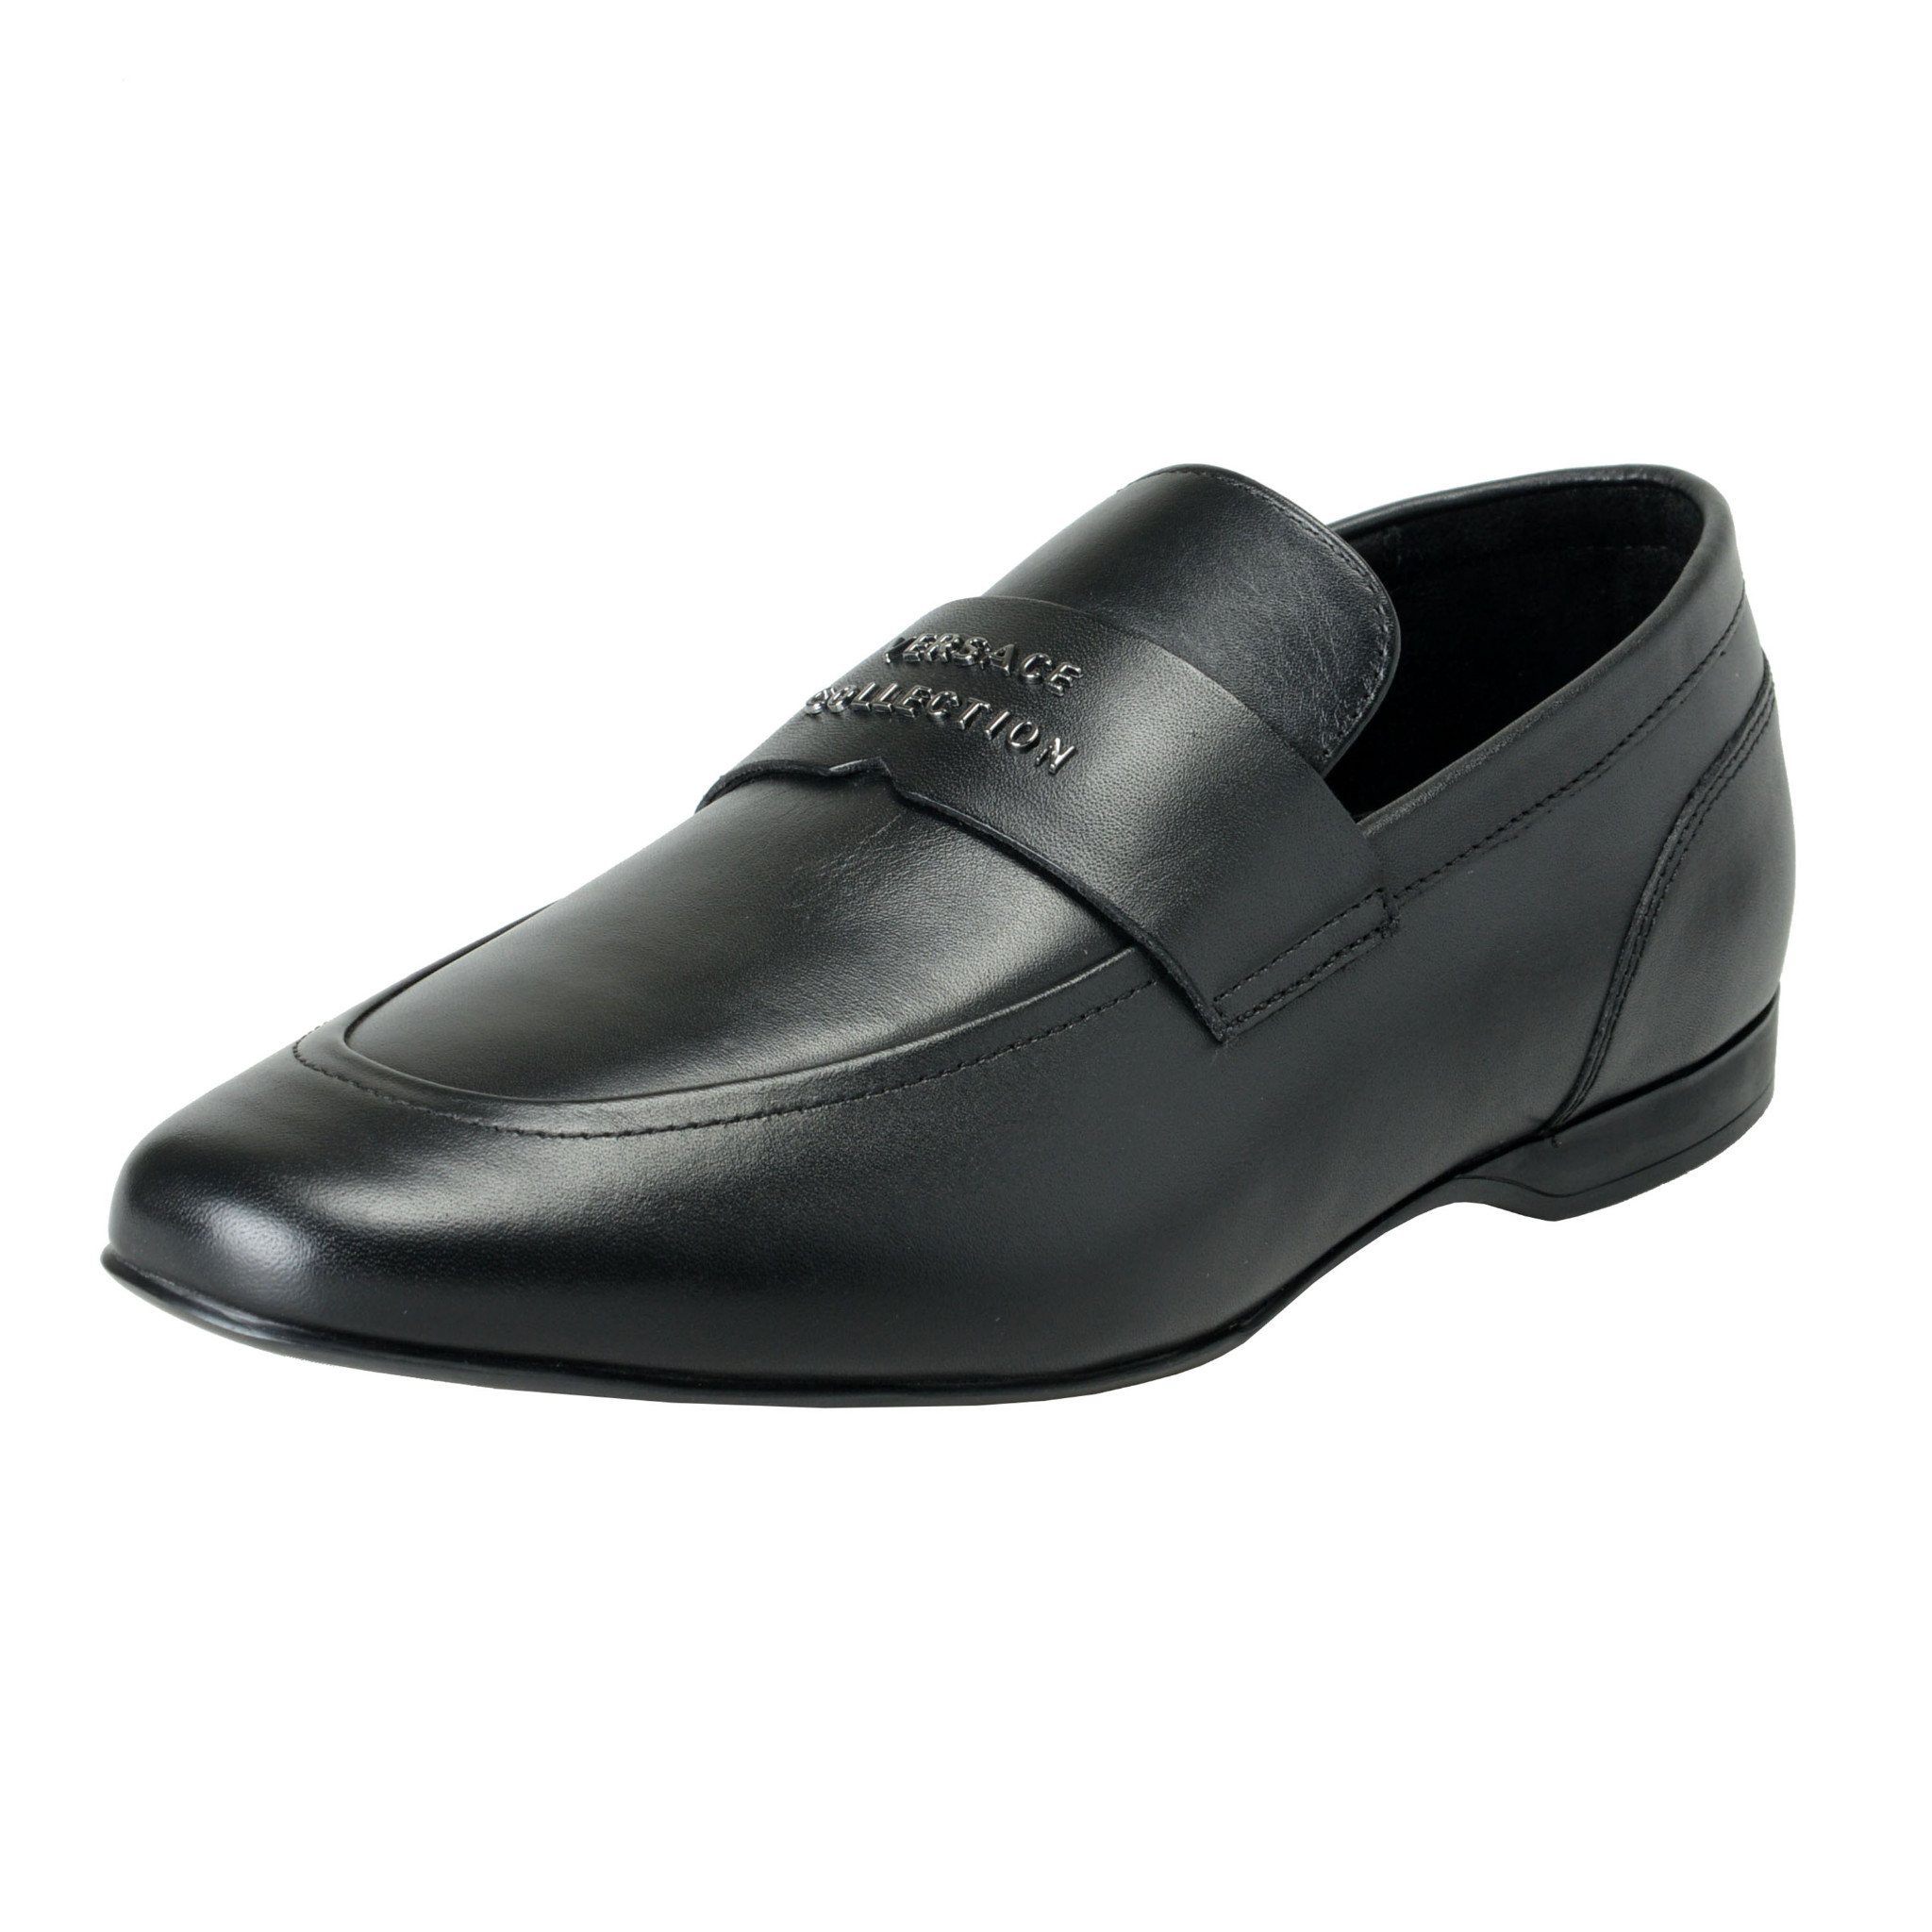 men's black leather slip on shoes